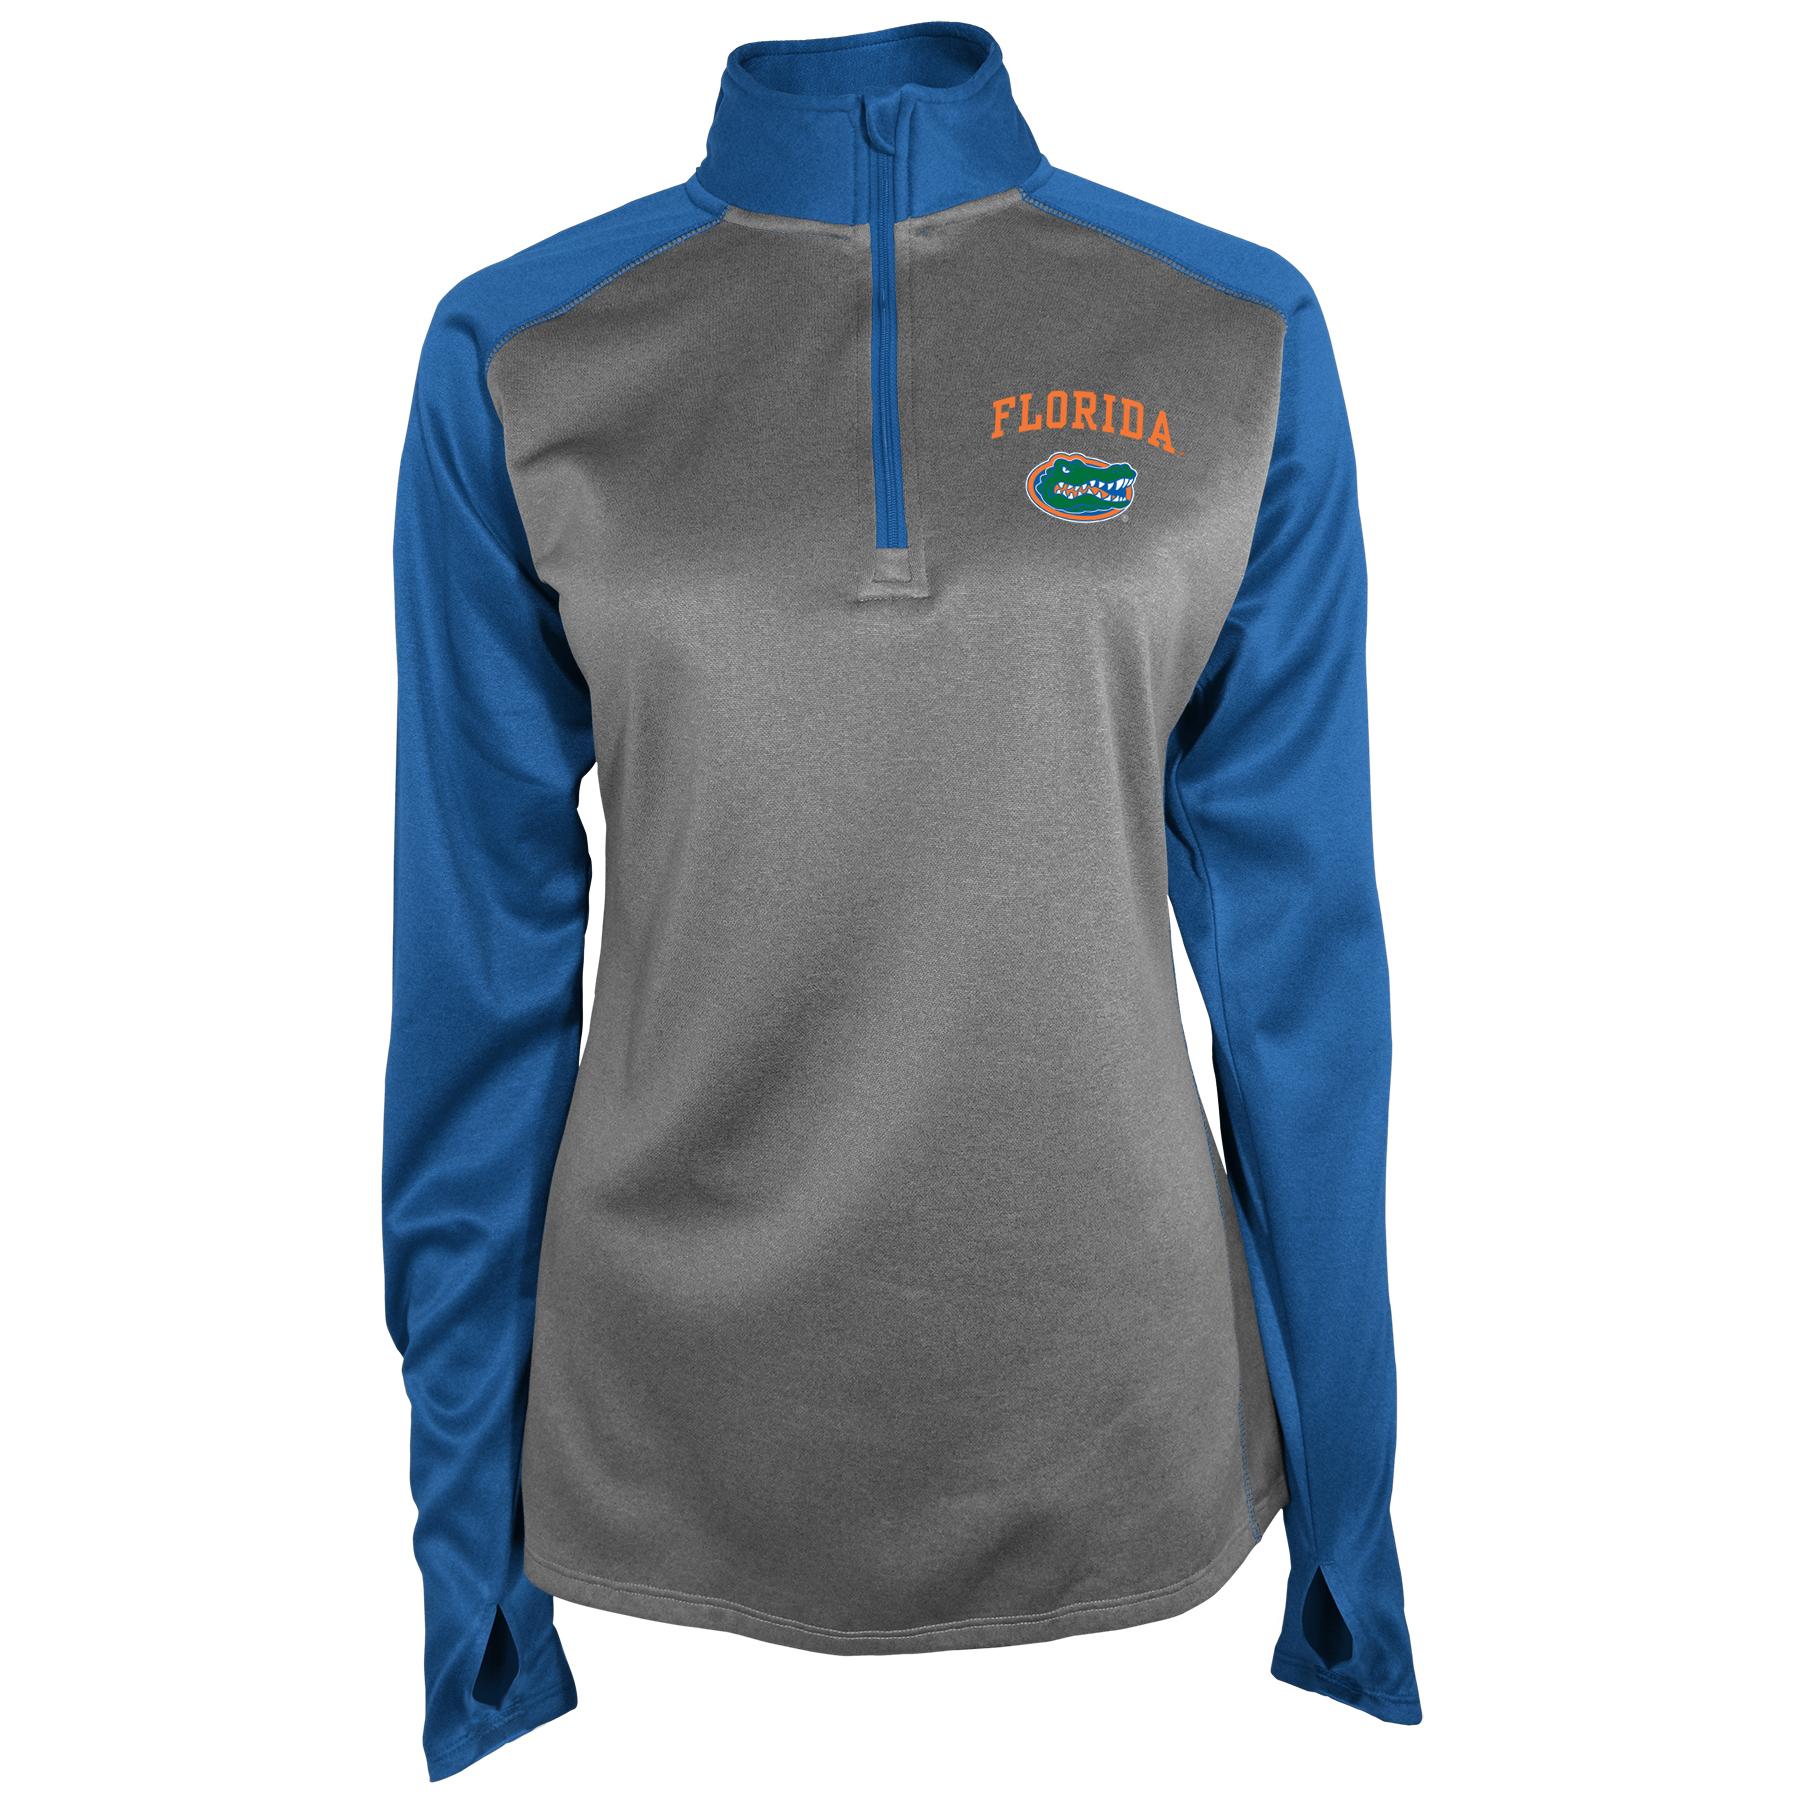 NCAA Women's Quarter-Zip Athletic Shirt - University of Florida Gators